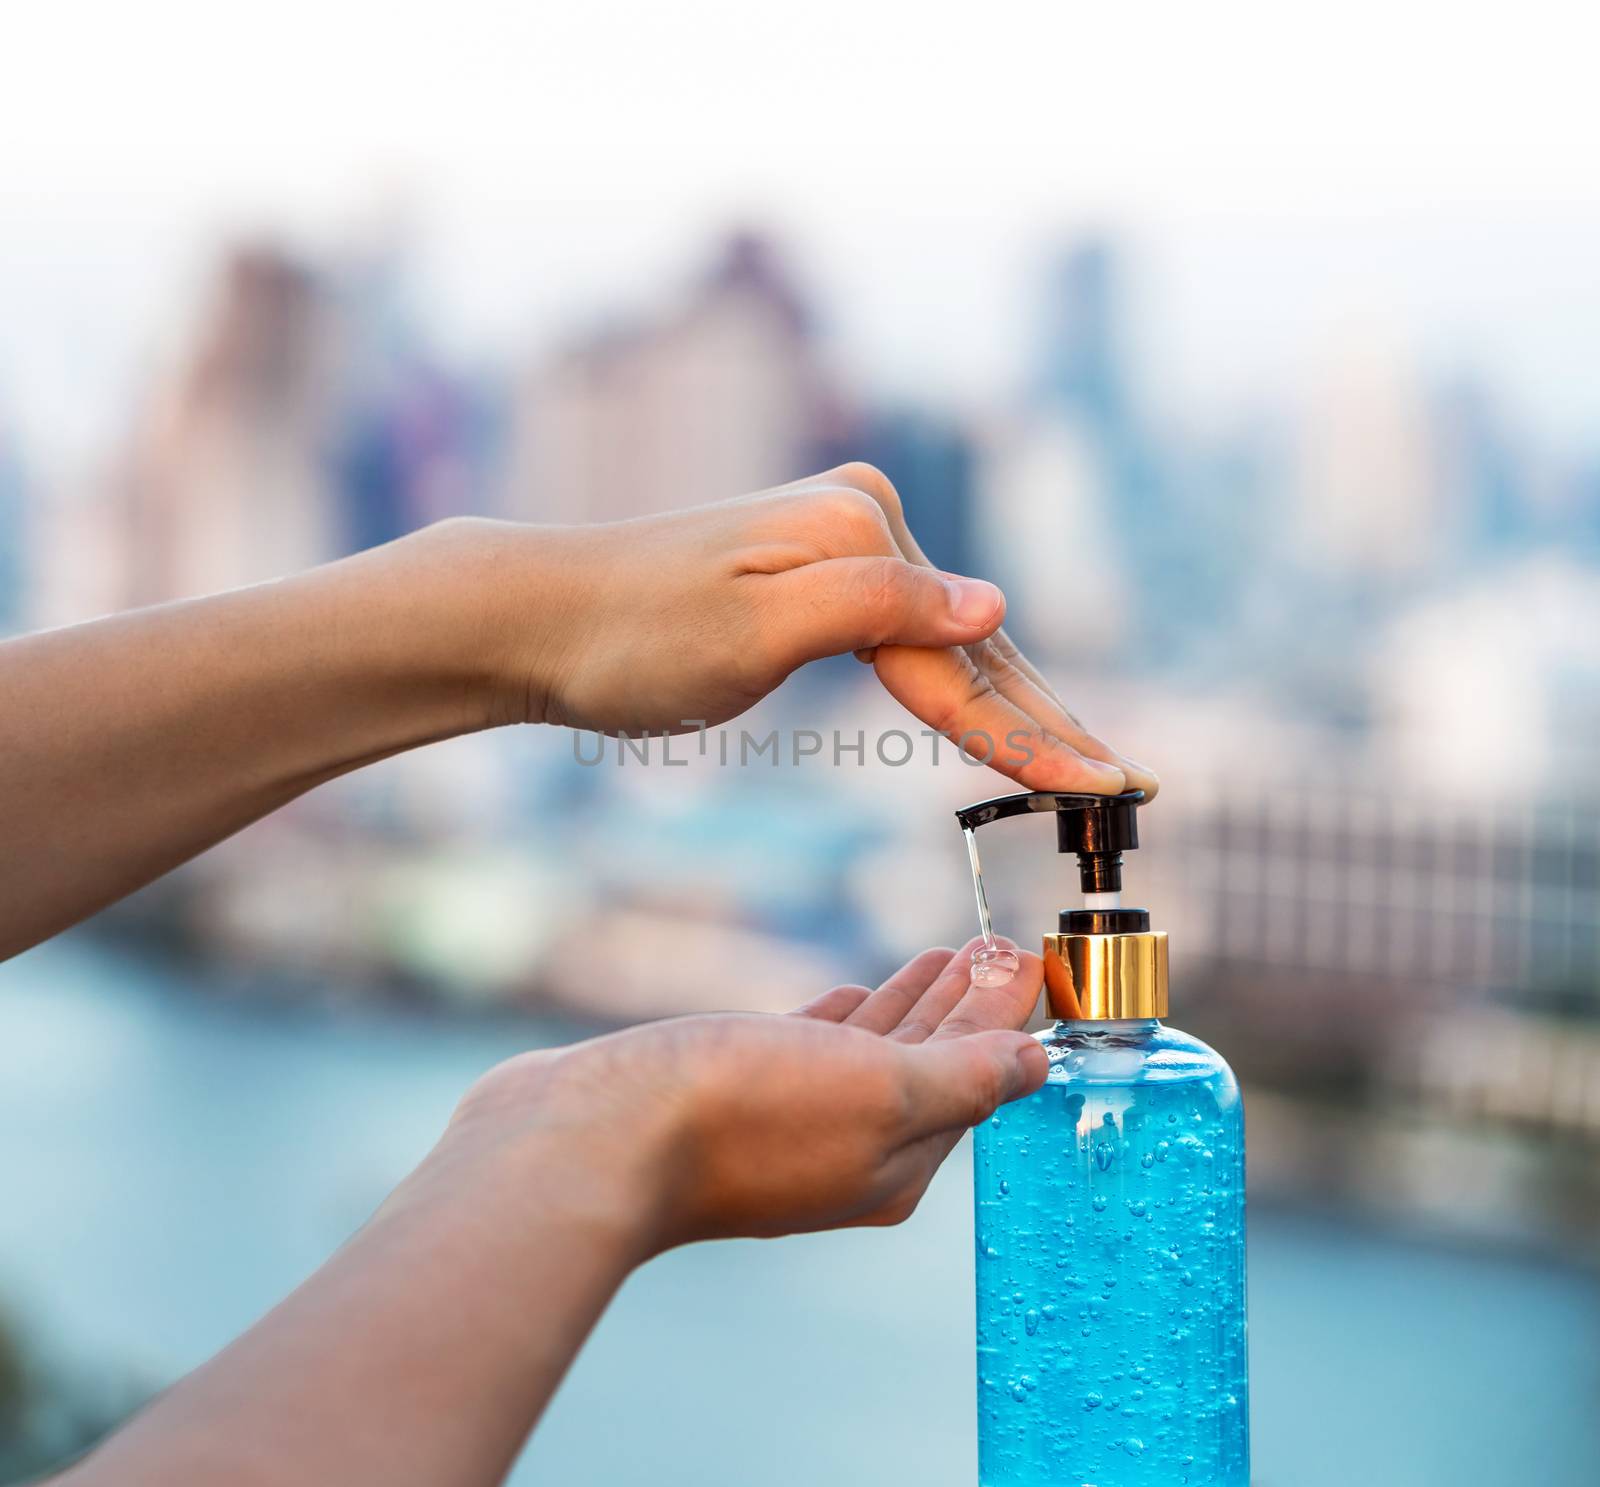 Closeup Asian woman hand using wash hand sanitizer gel pump disp by Tzido